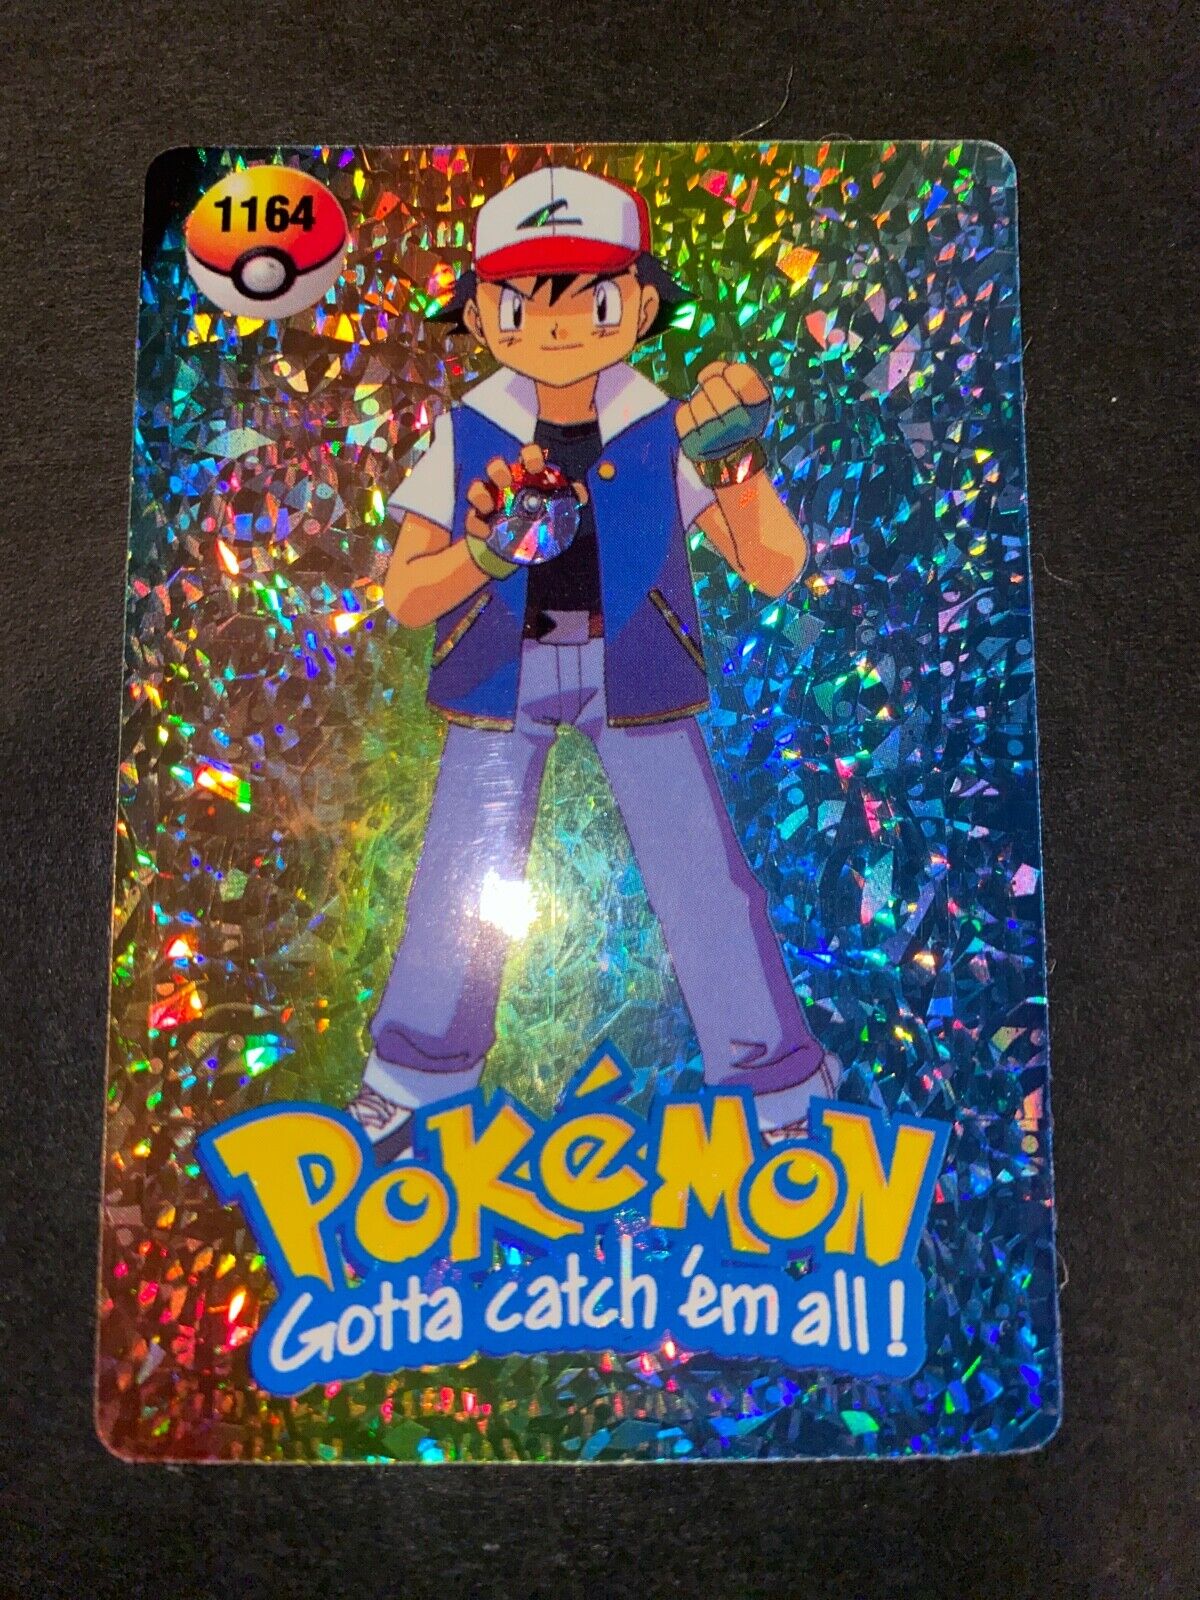 1996 Pokemon Card Holo Prism Bandai Vintage Laser Card NM/MINT Condition